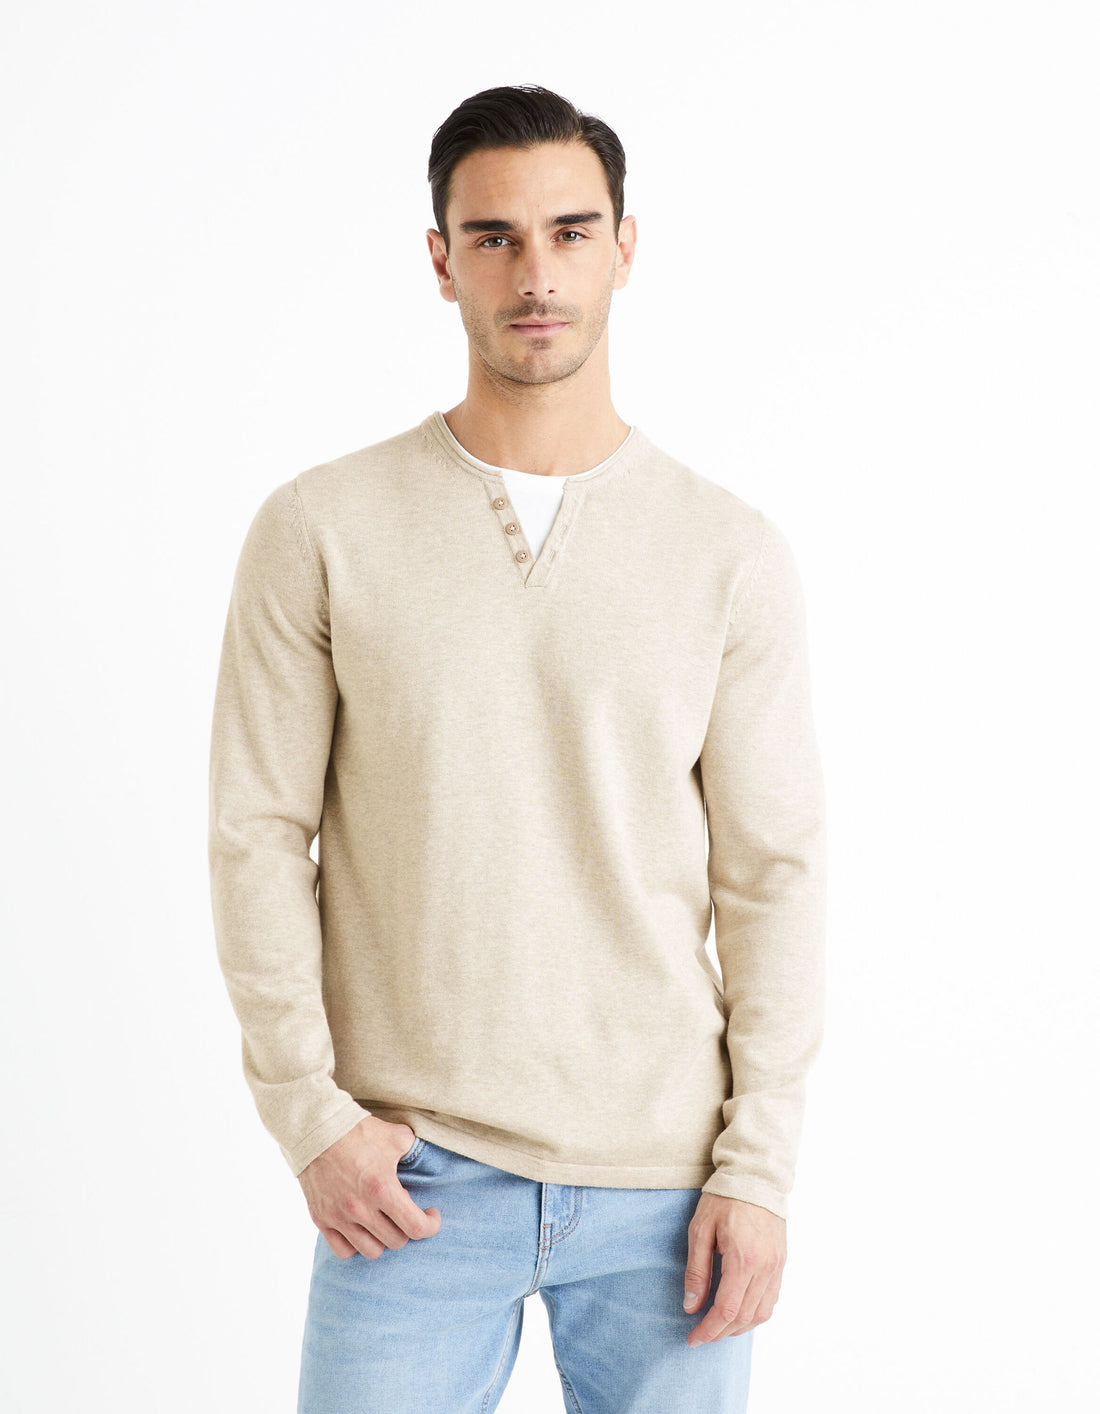 Tunisian Collar Sweater 100% Cotton - Beige_FELANO_BEIGE MEL_01